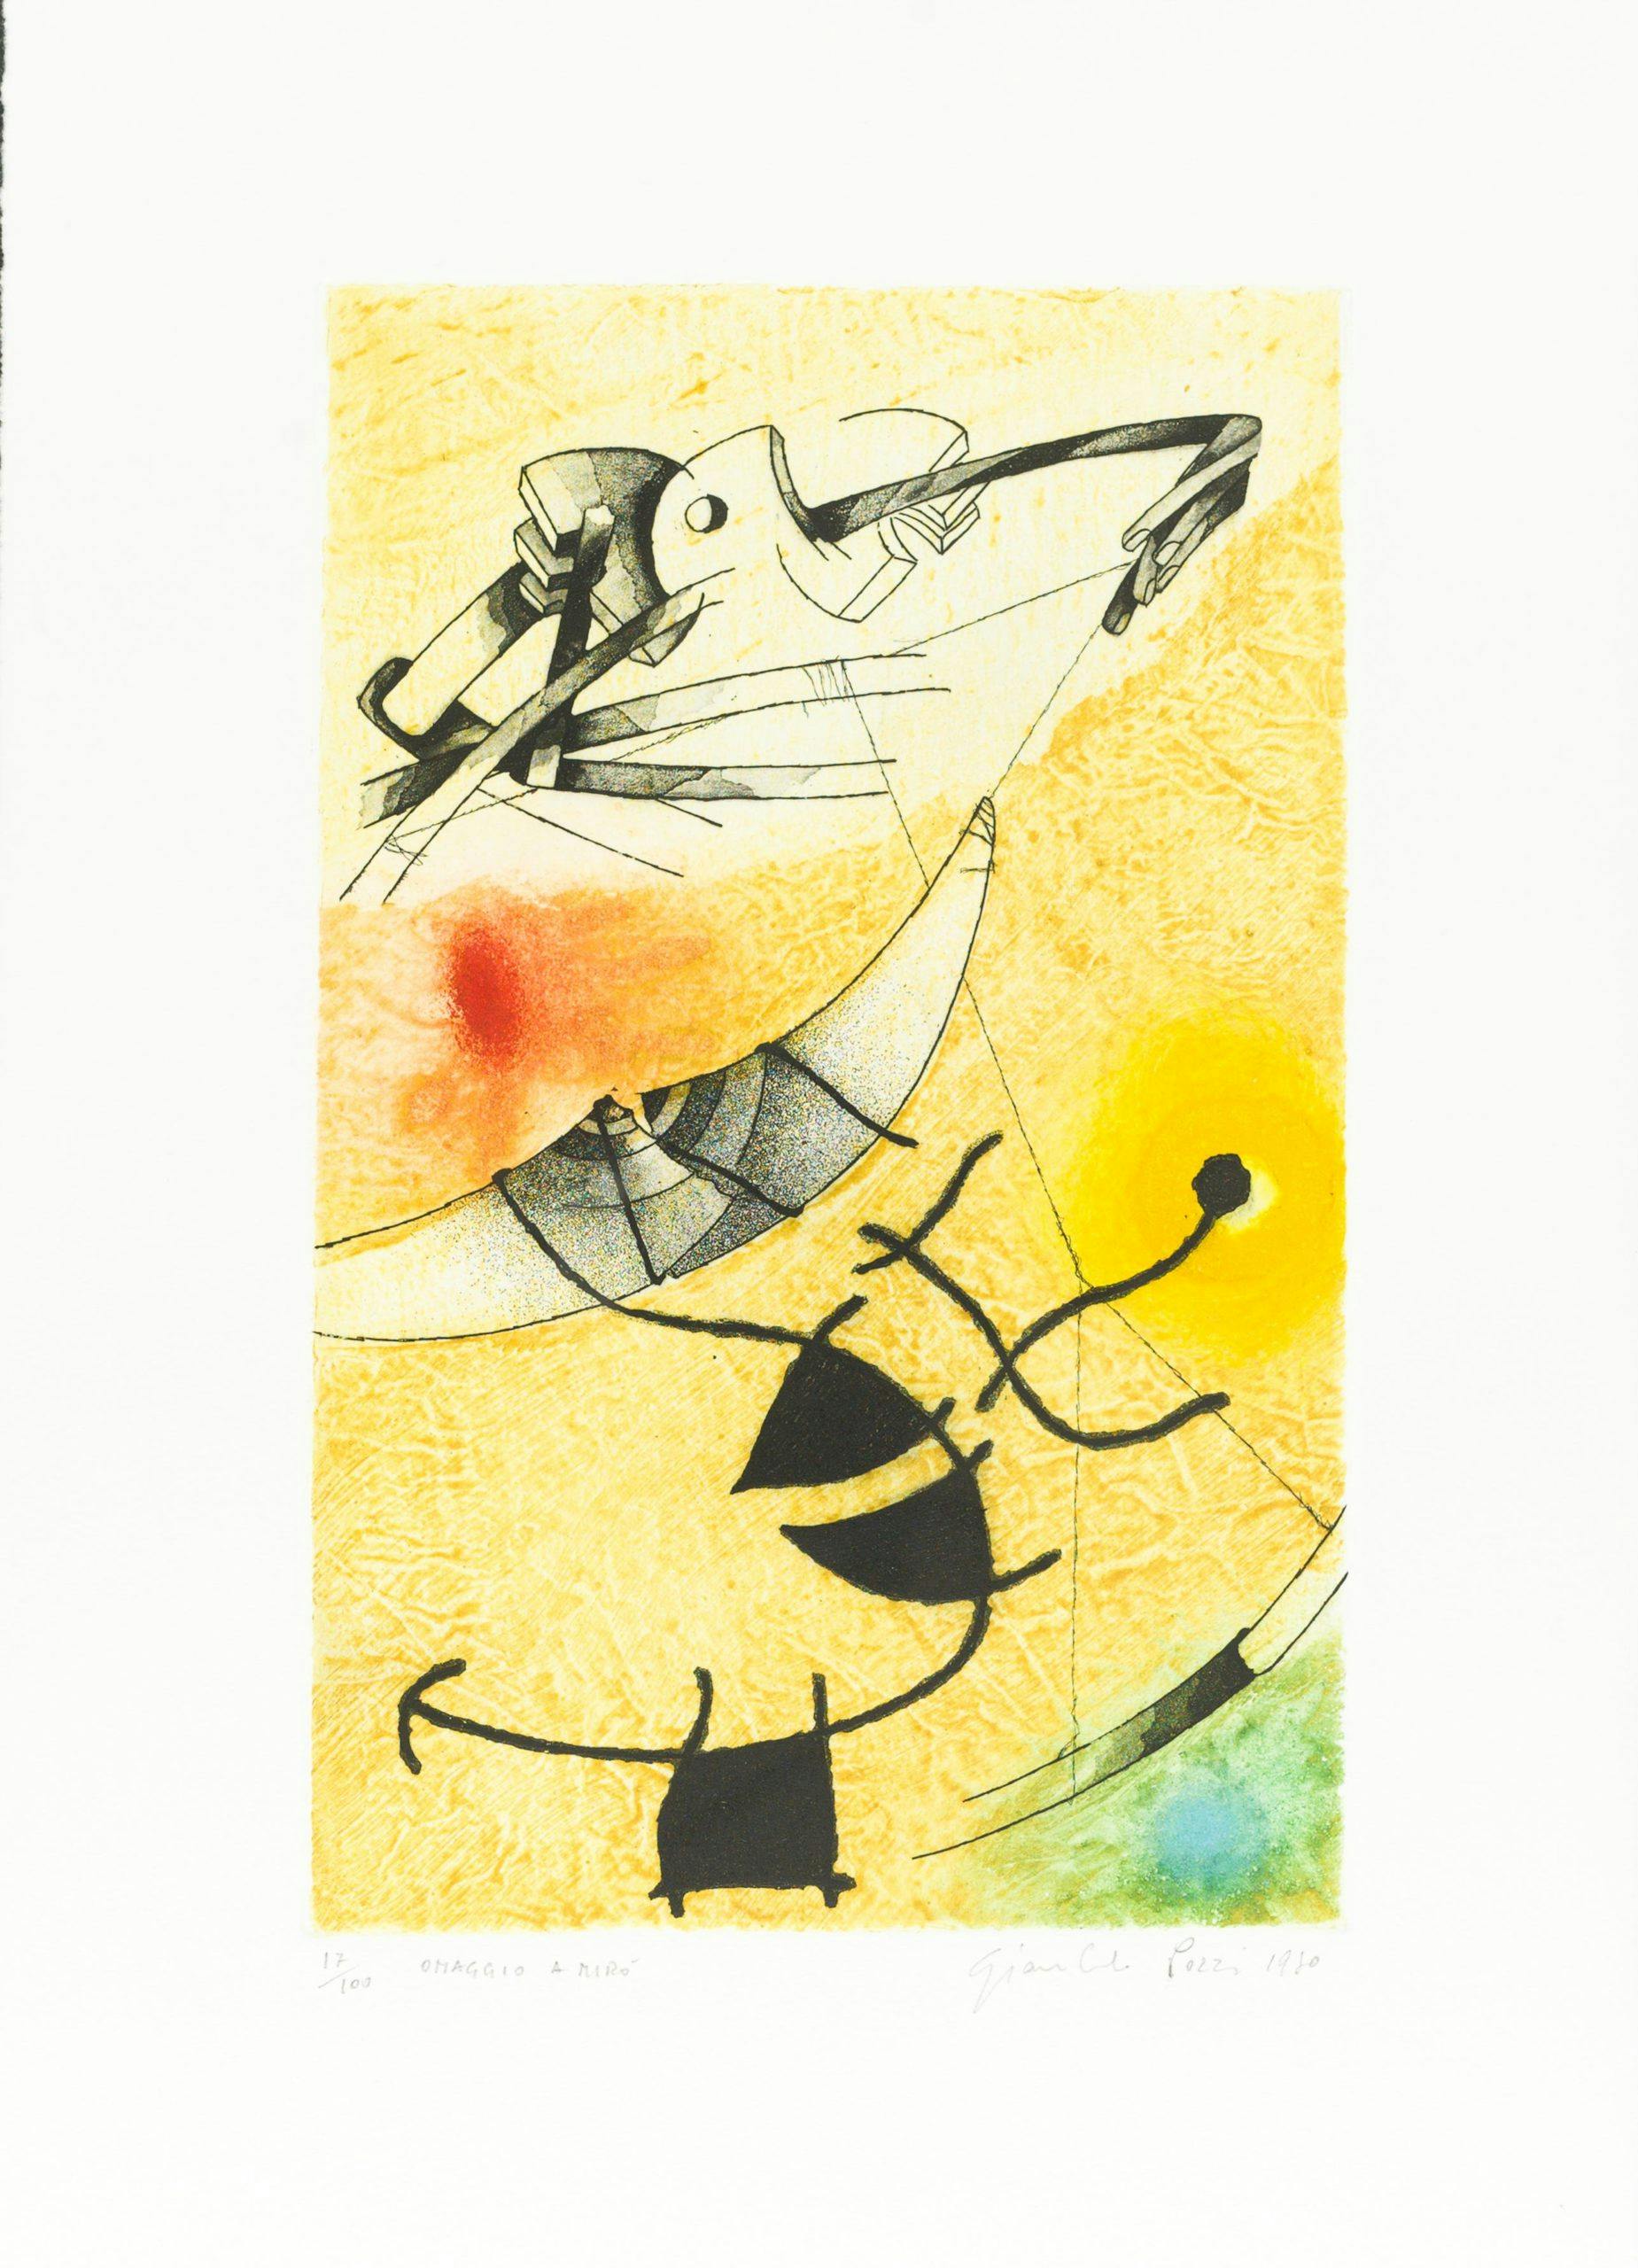 Hommage à Joan Miró by Giancarlo Pozzi